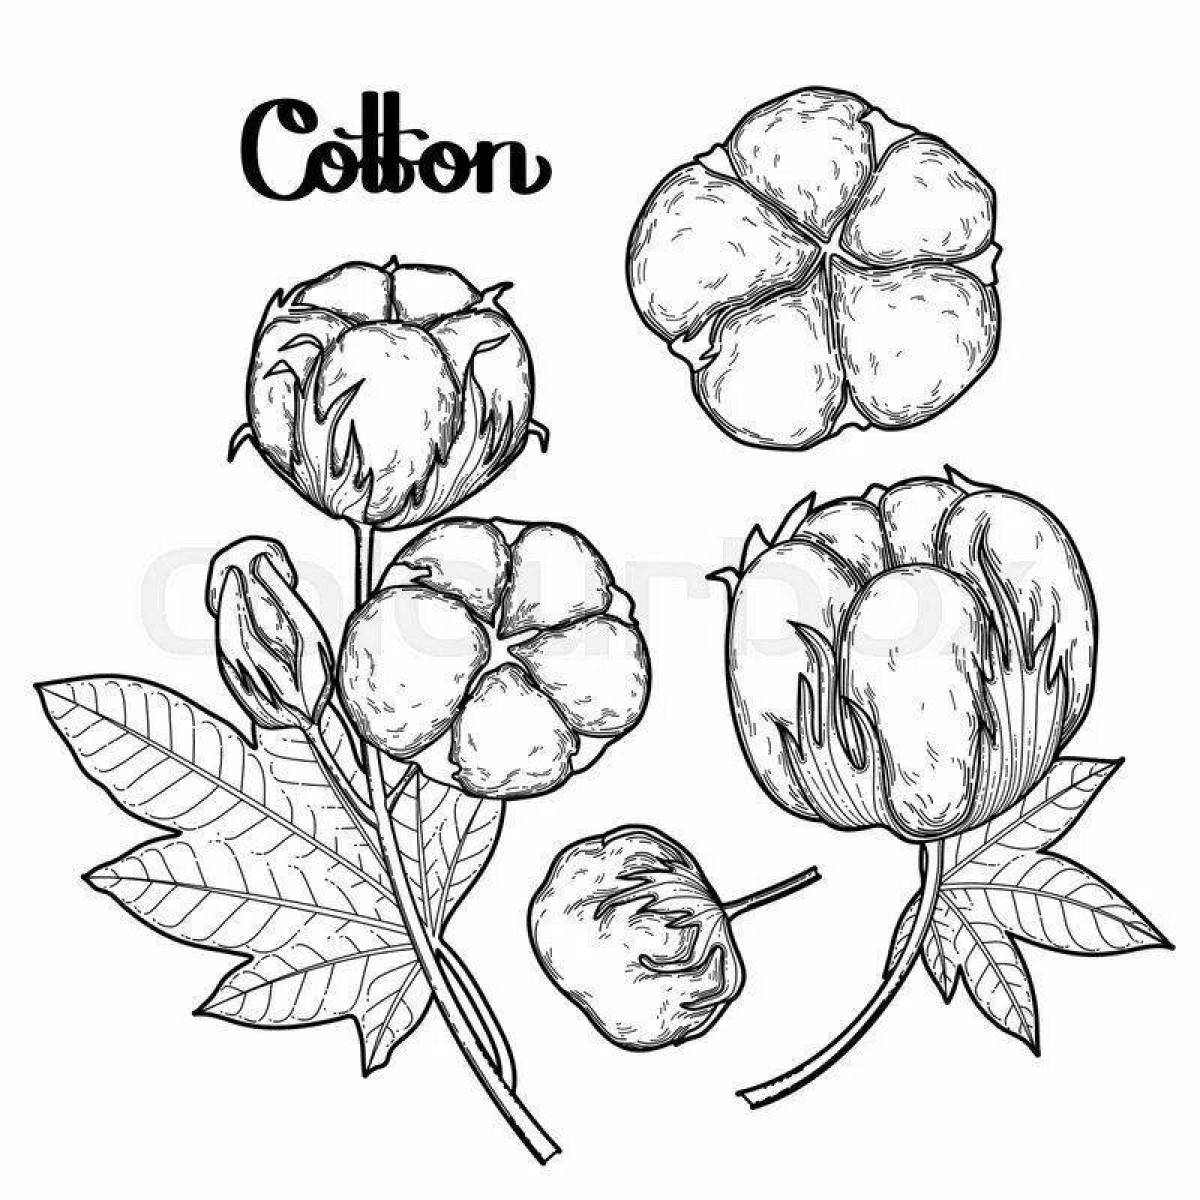 Calm cotton coloring page